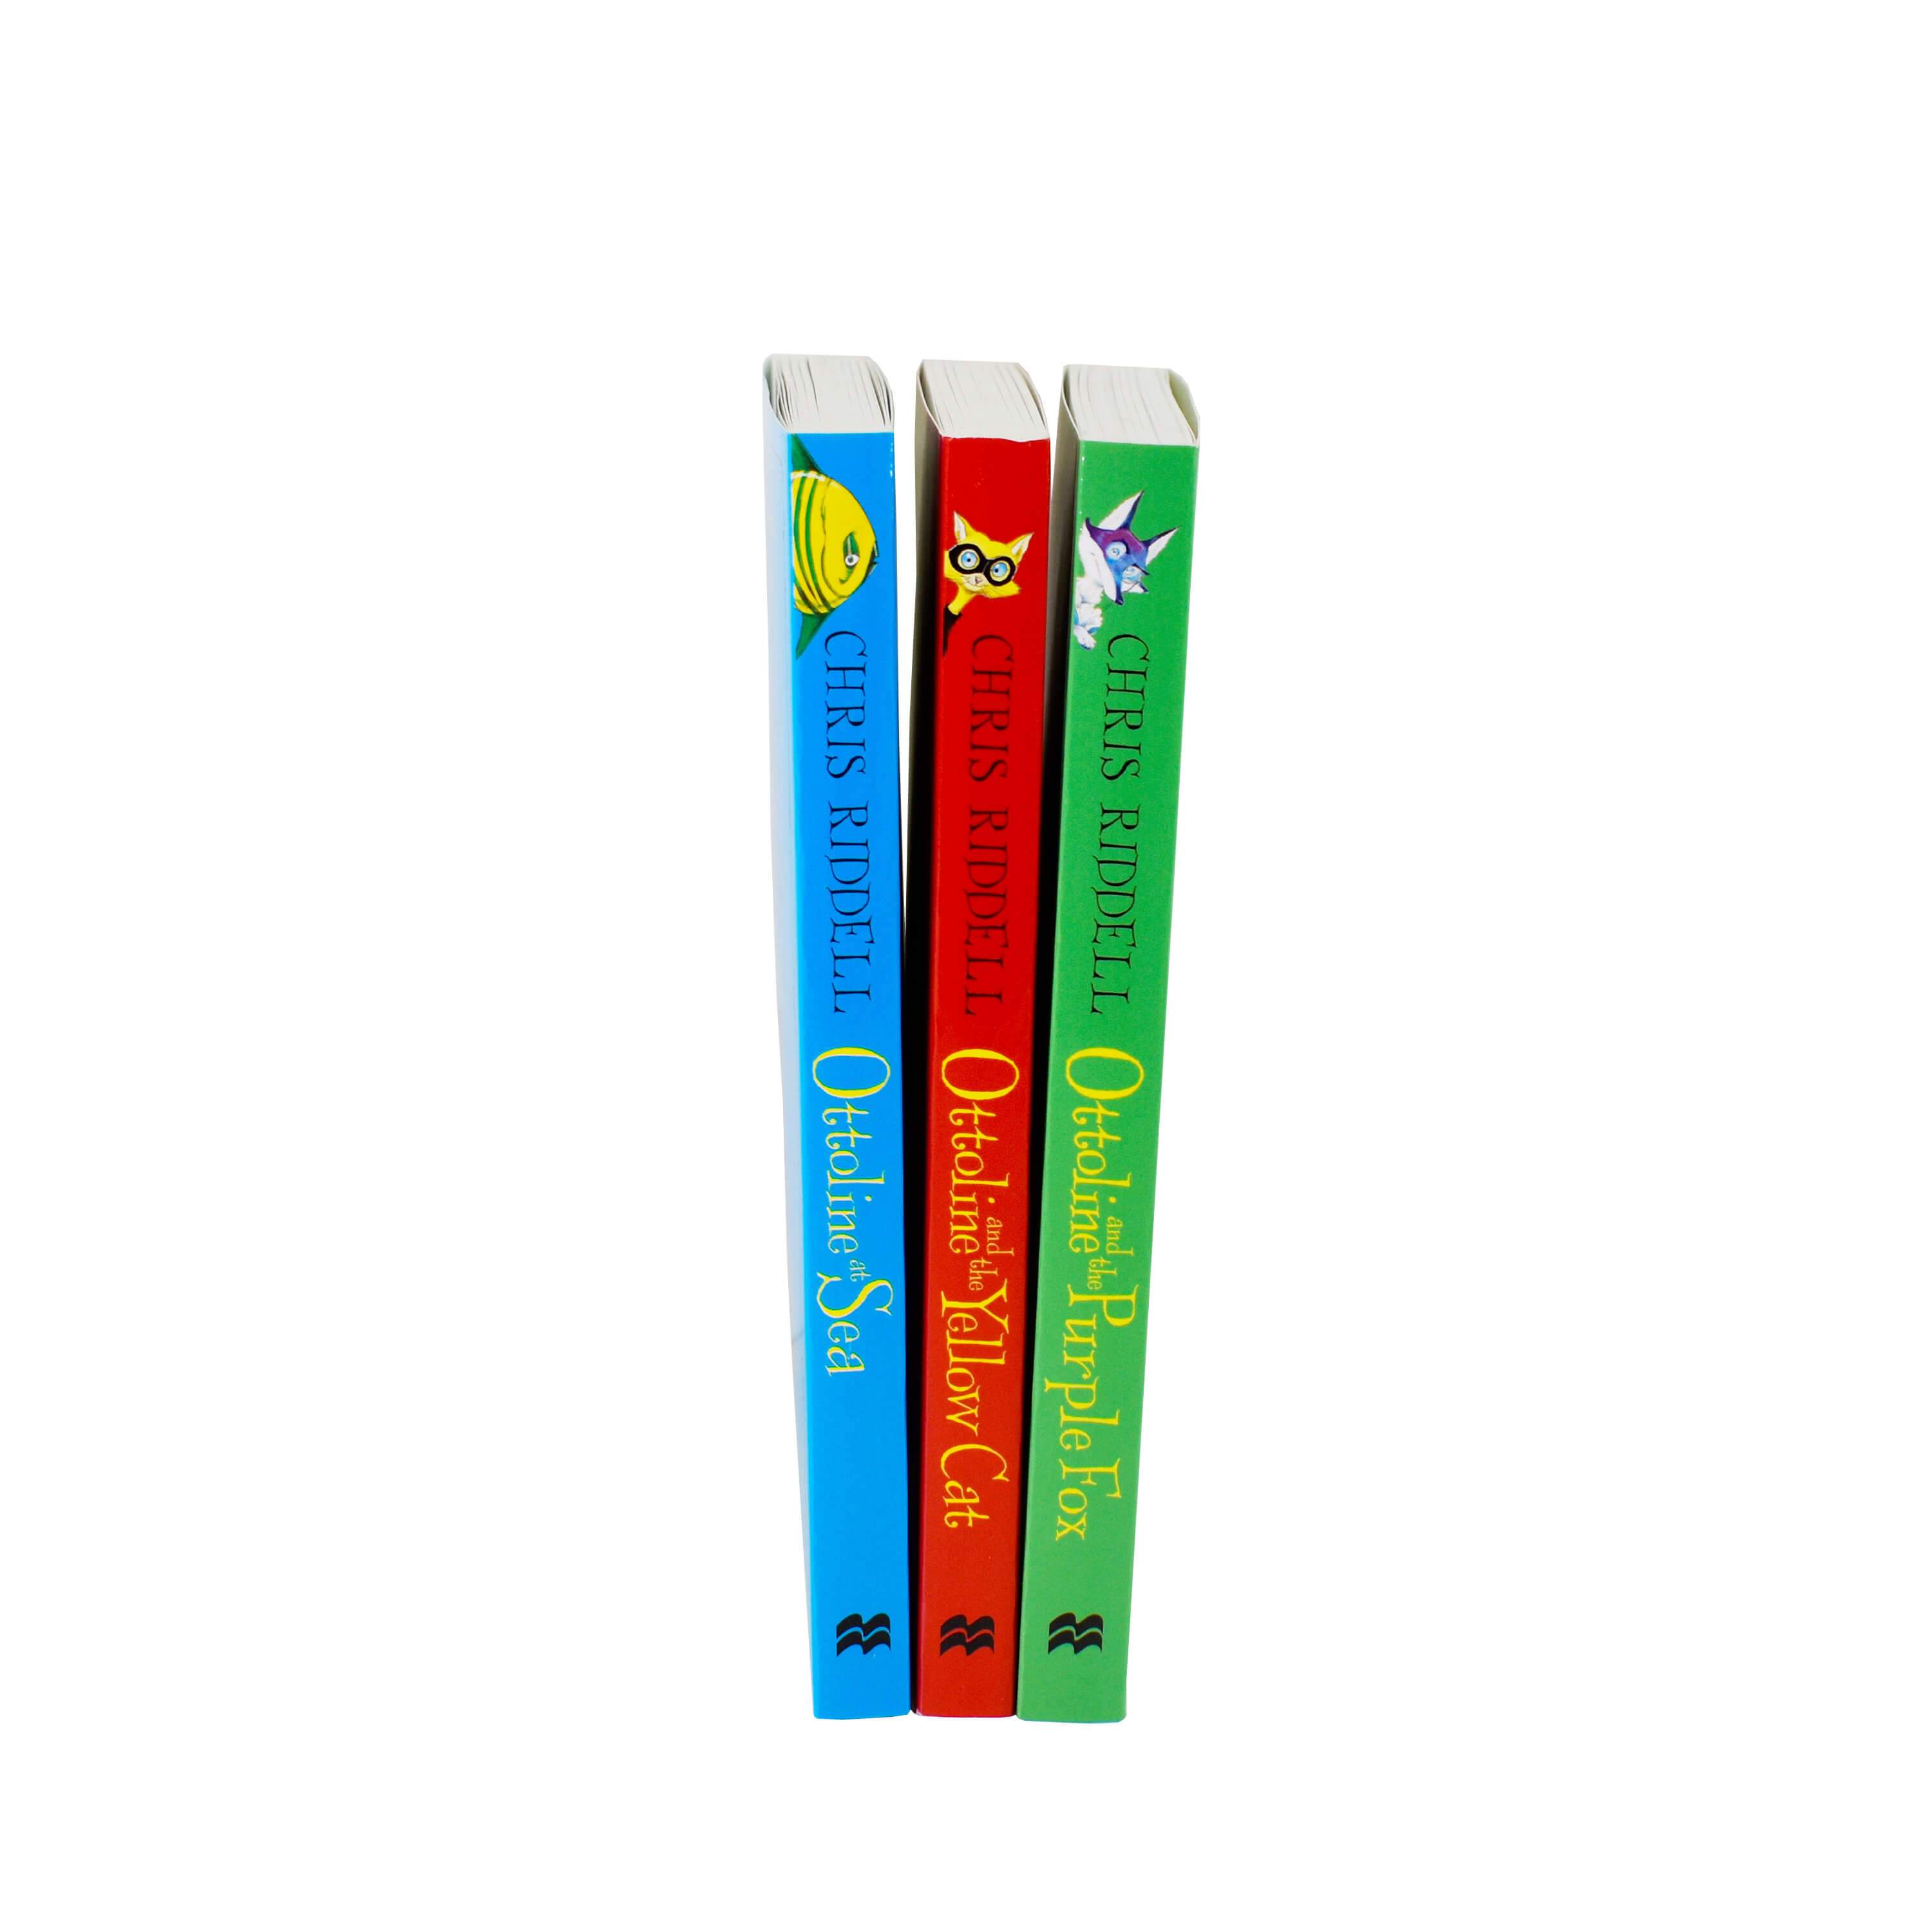 Ottoline Series 3 Books Children Collection Pack Paperback Set By Chris Riddell - St Stephens Books